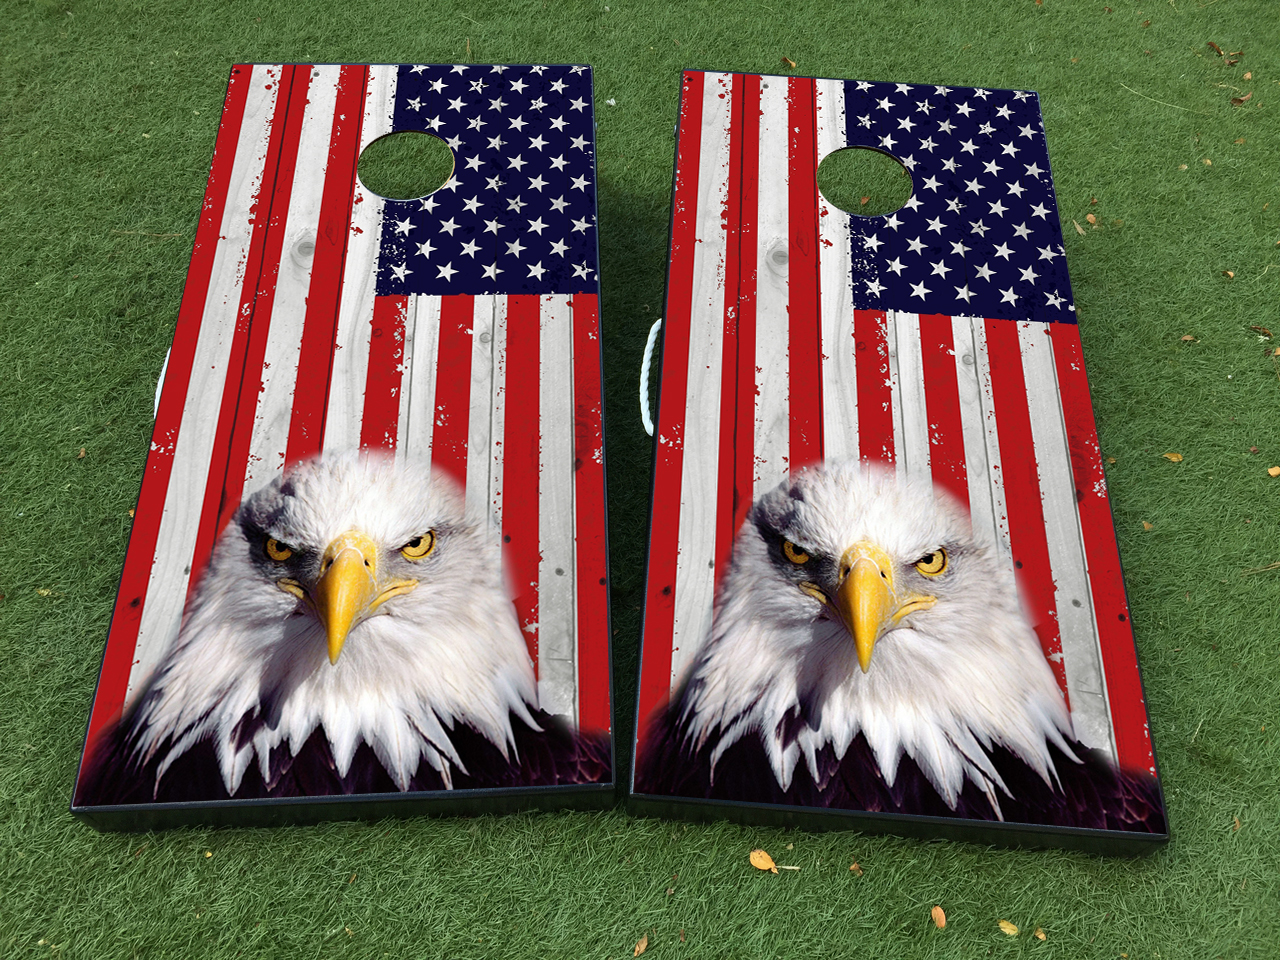 Details about   Patriotic American Flag Eagle Cornhole Wraps Board Game Decal Vinyl Sticker C06 